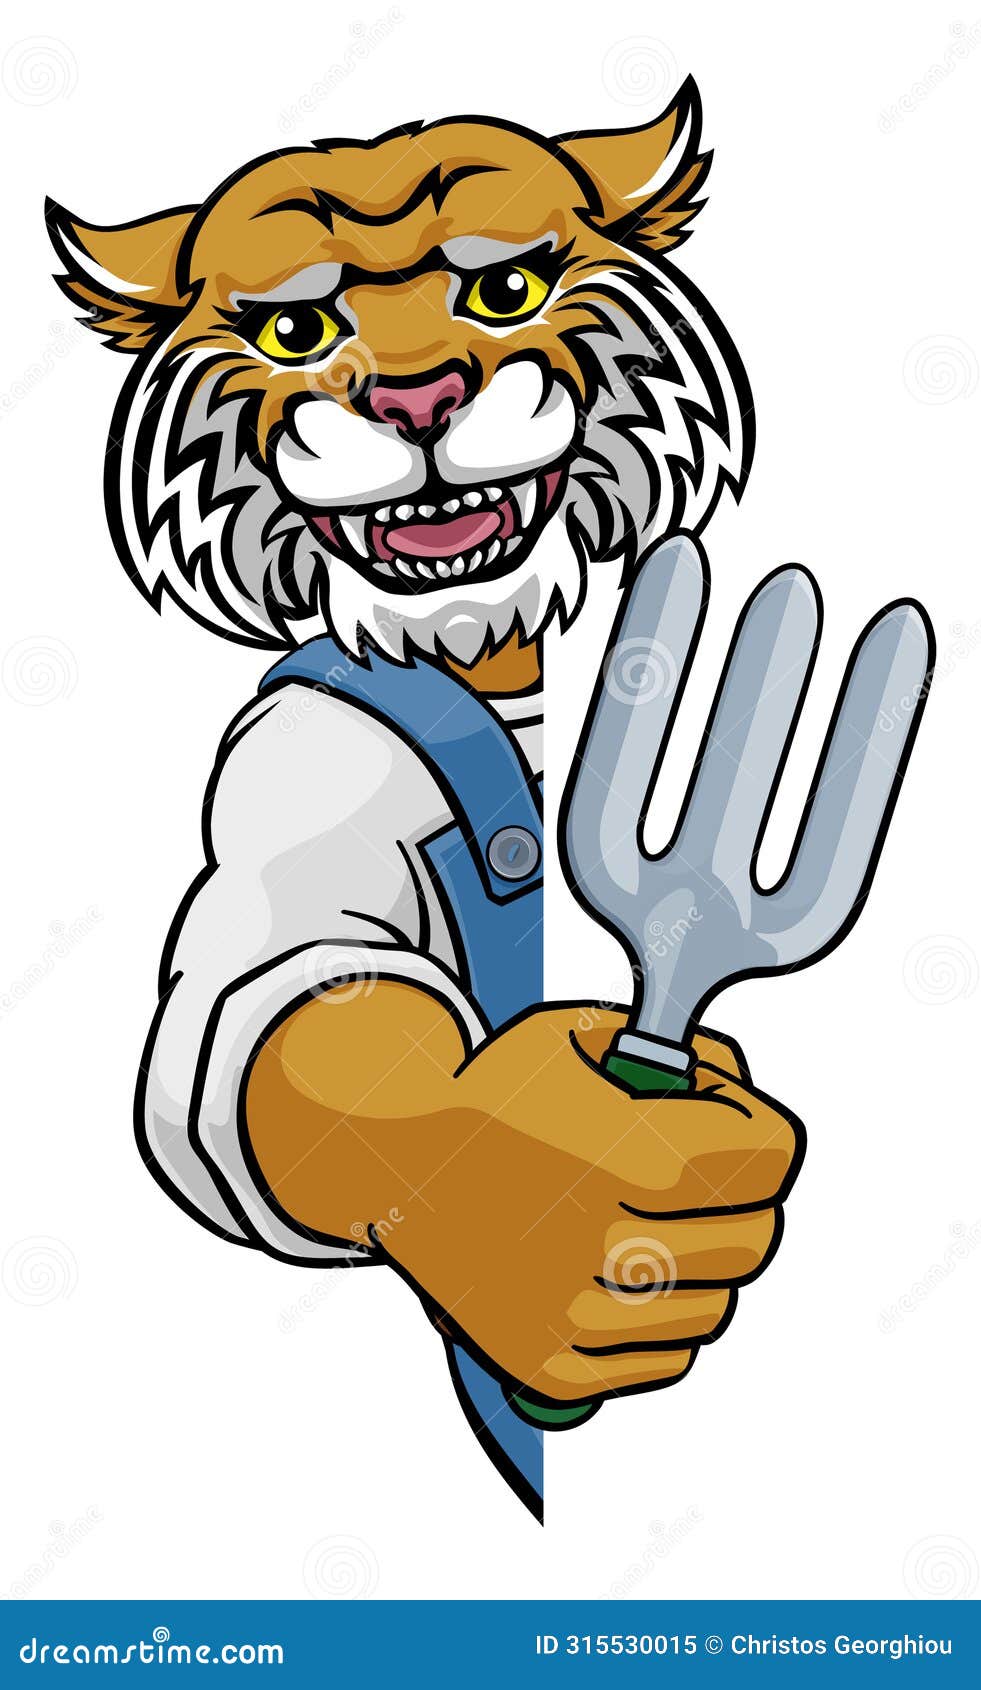 wildcat gardener gardening animal mascot